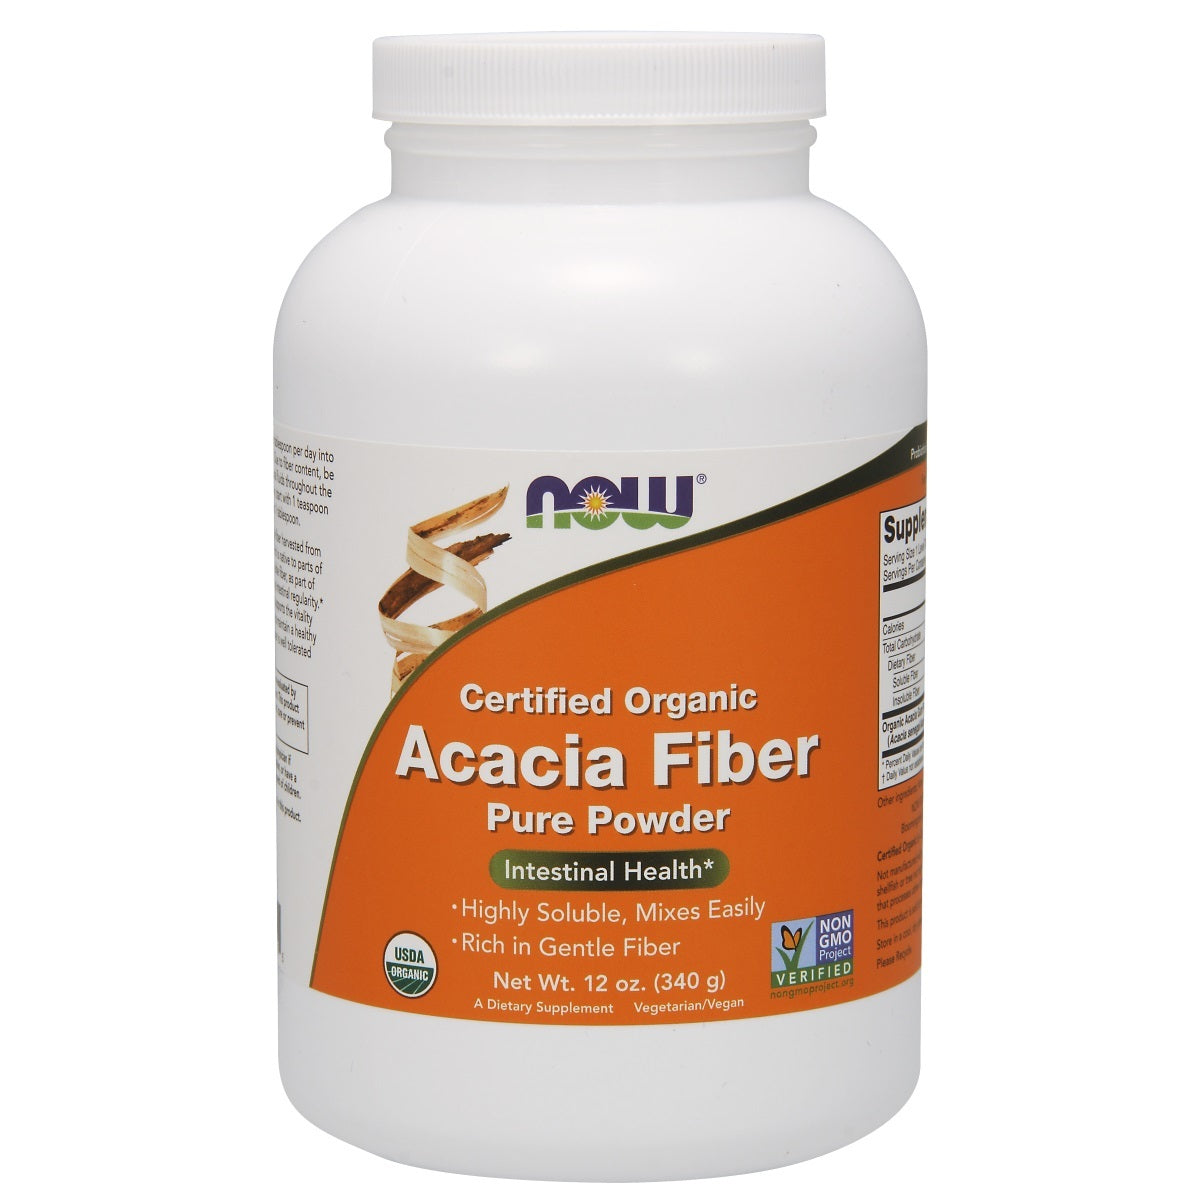 Primary image of Acacia Fiber Pure Powder